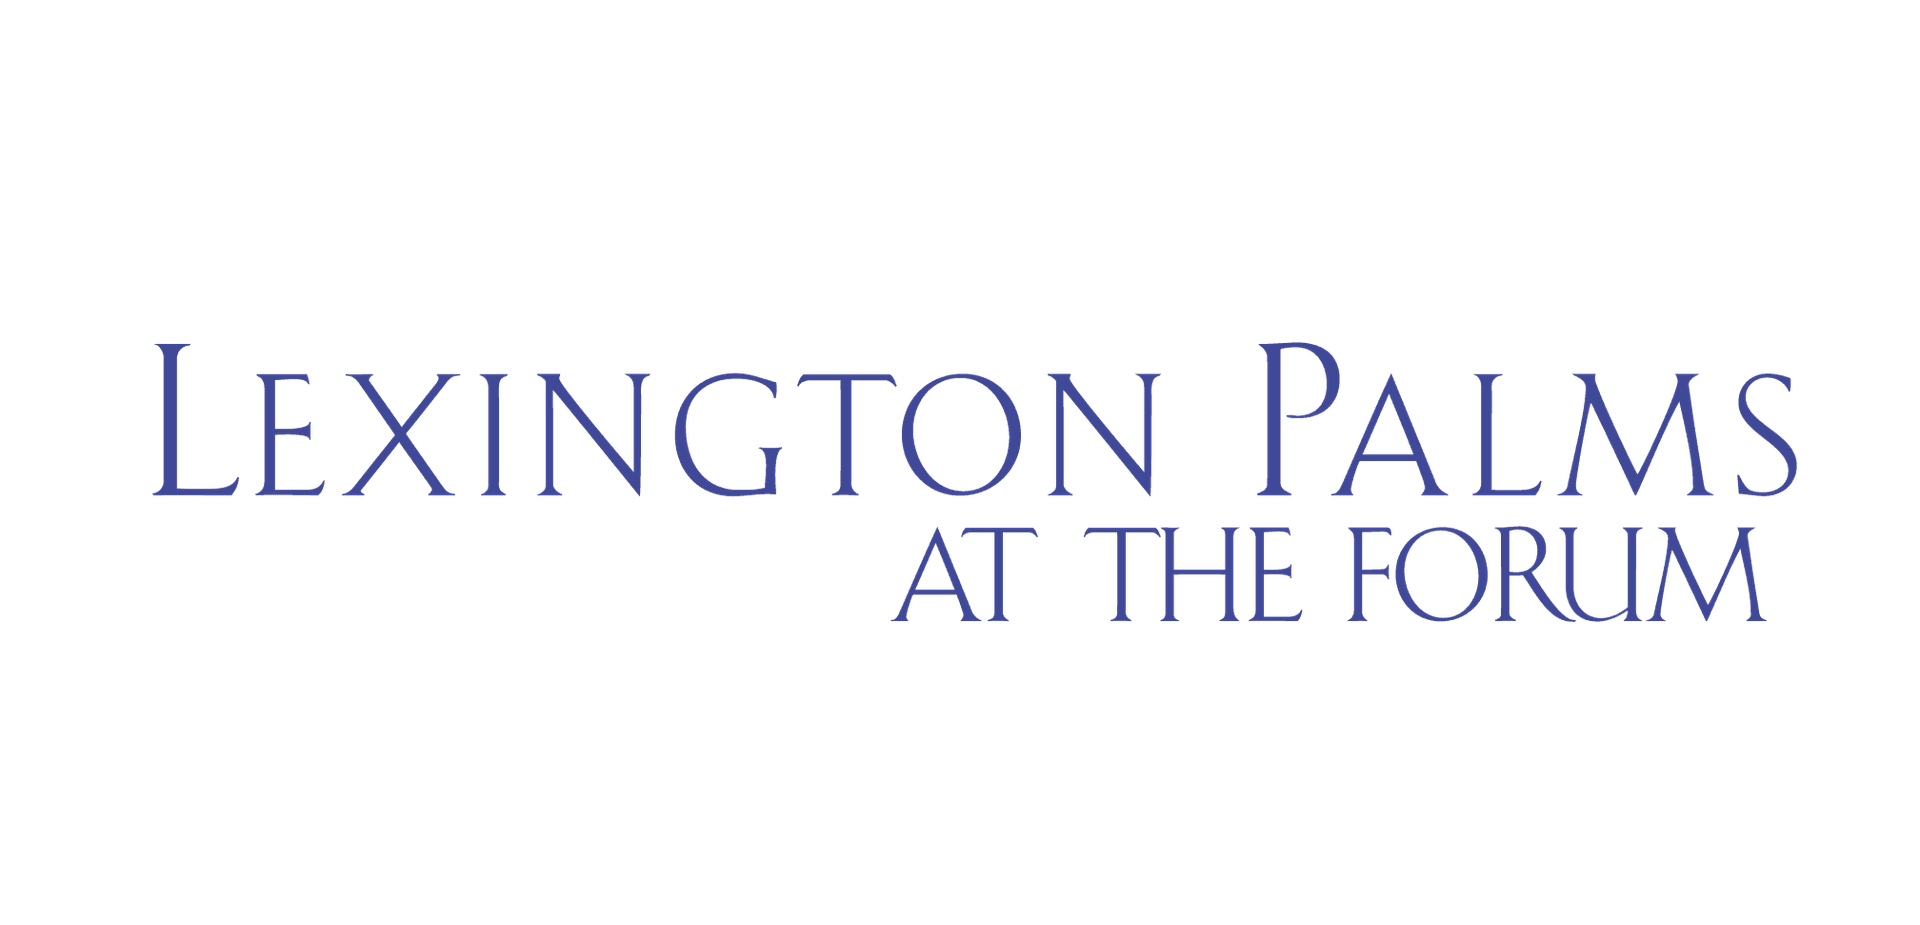 The property logo for Lexington Palms Apartments